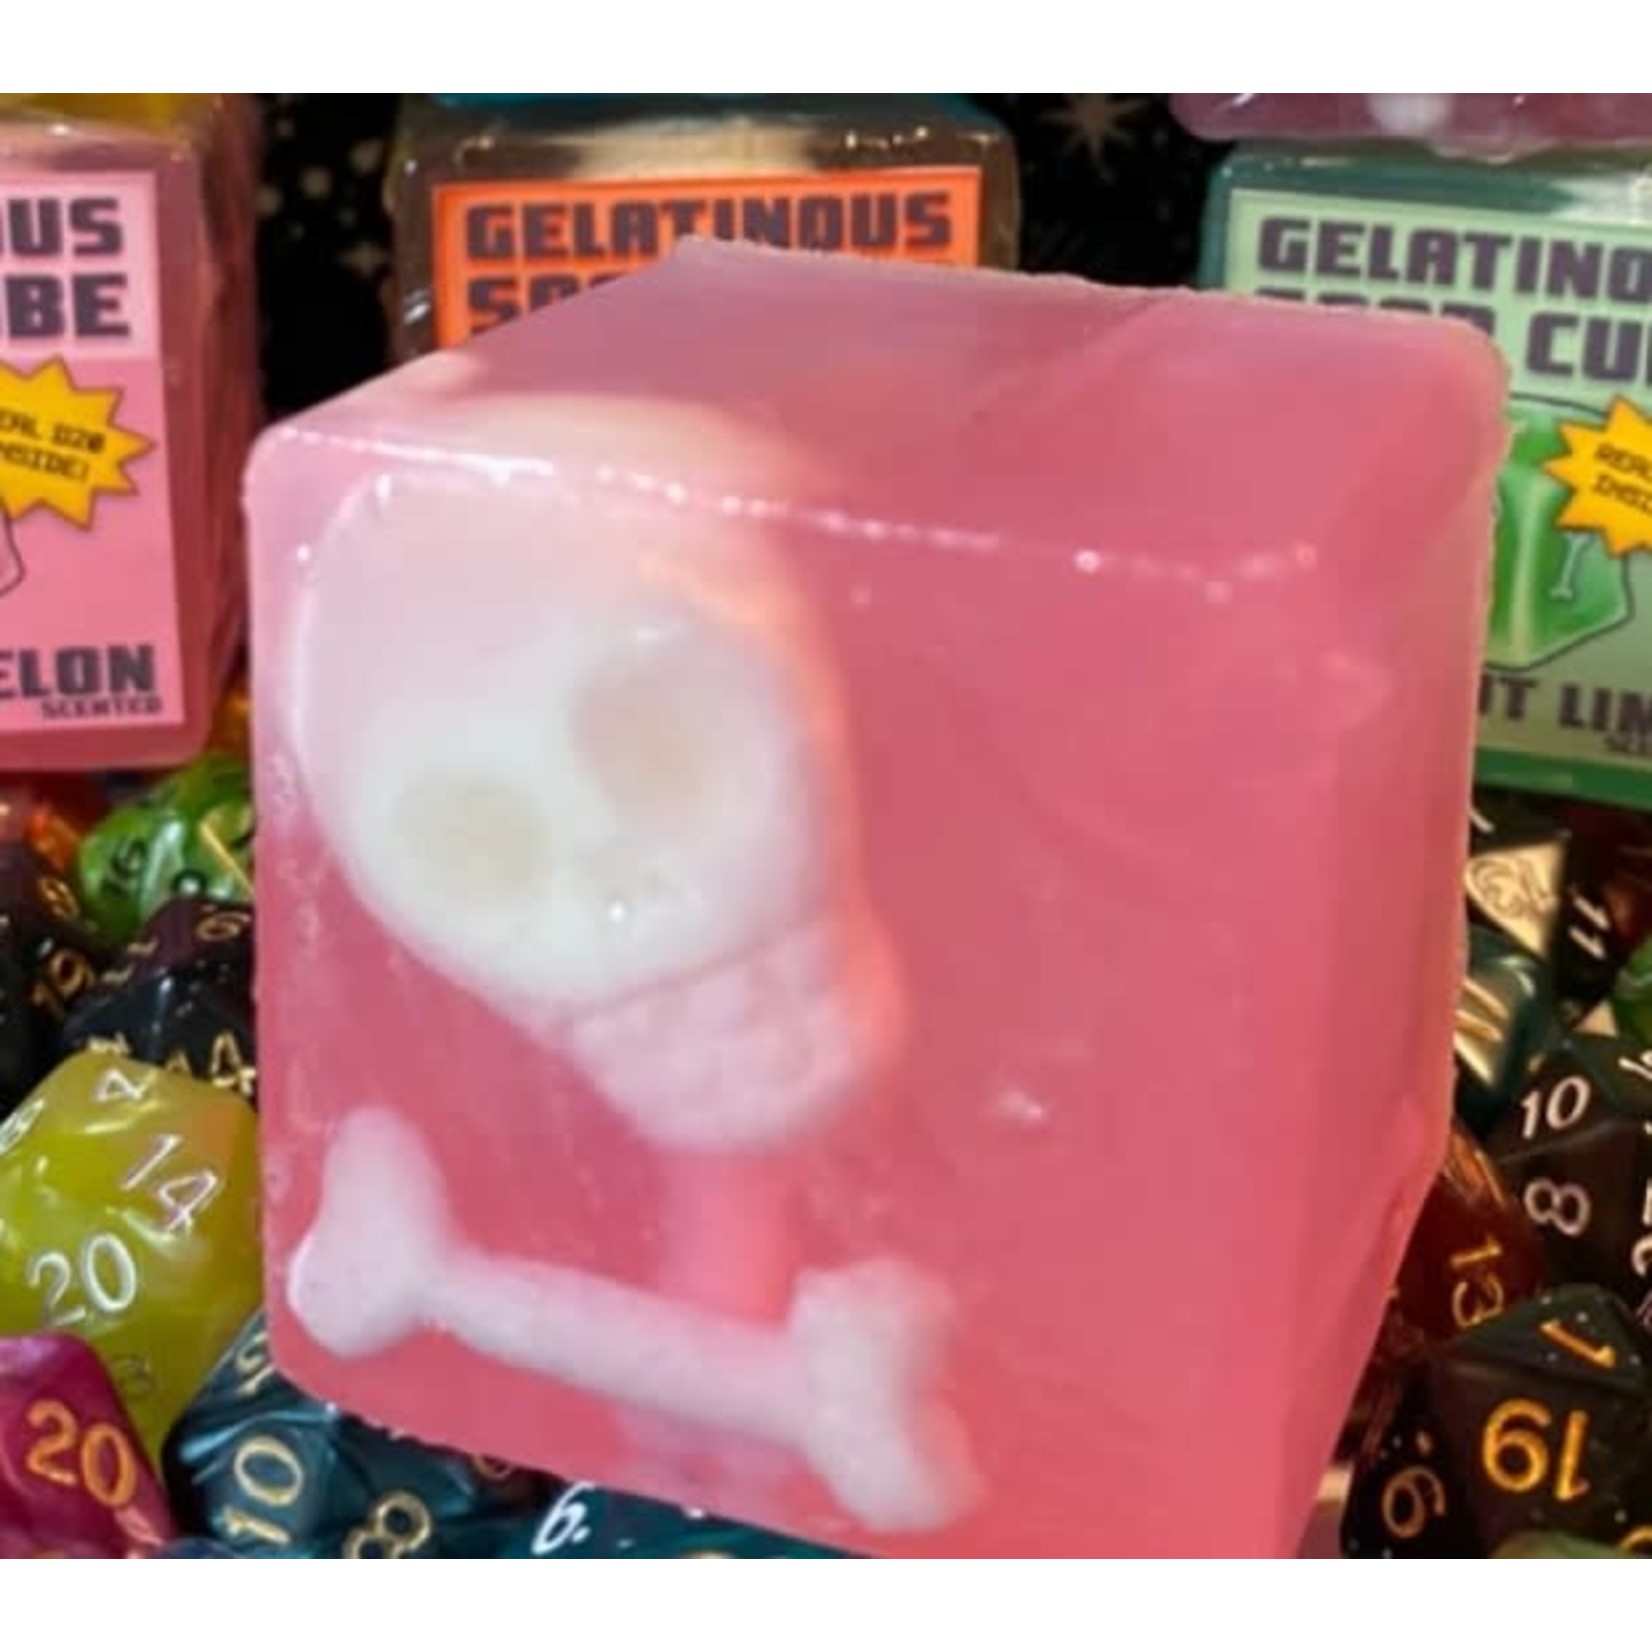 HippAndHorn Gelatinous Cube Soap with D20 Inside